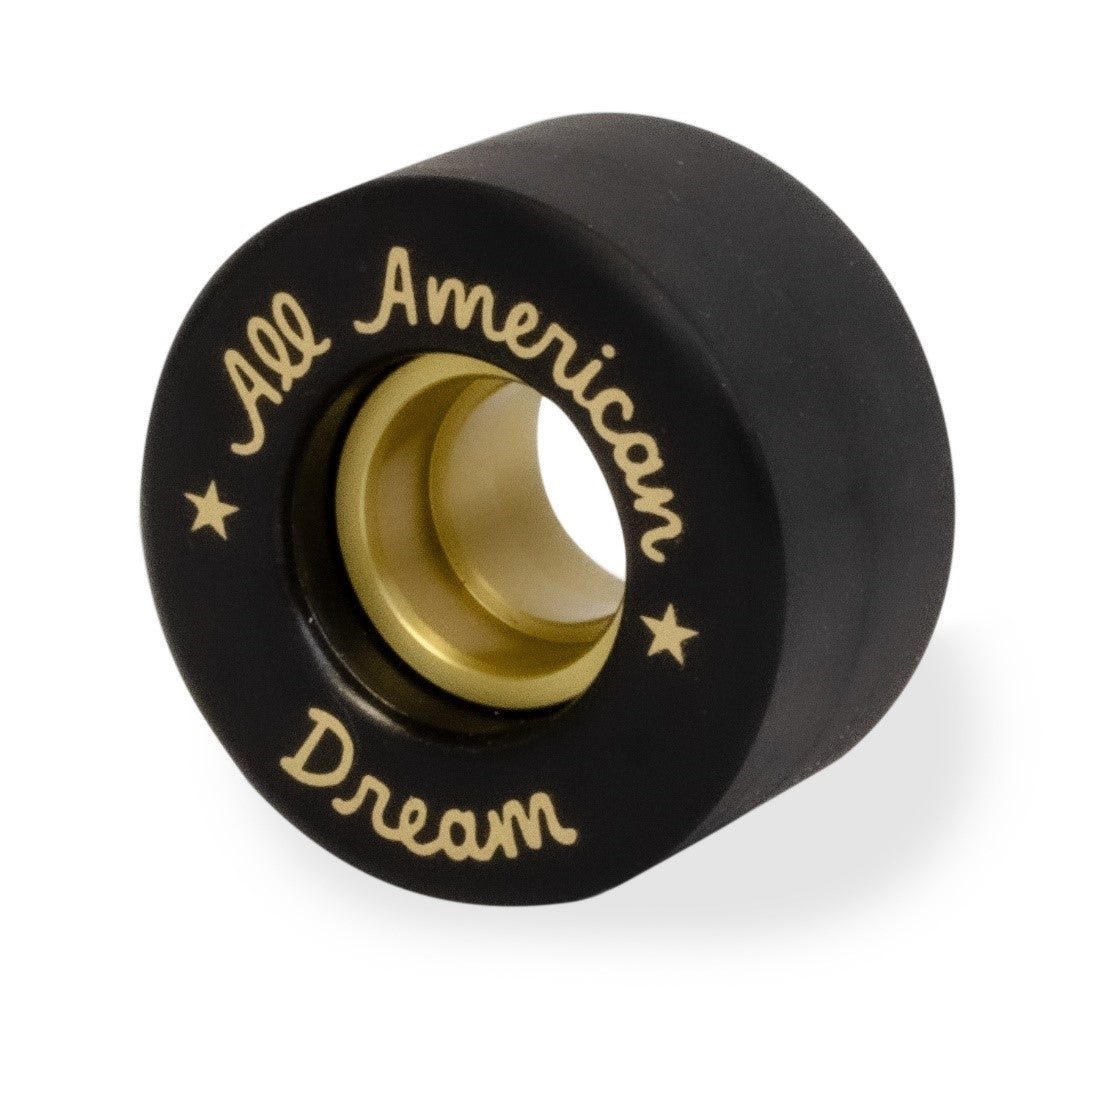 All American Dream / Fo-Mac